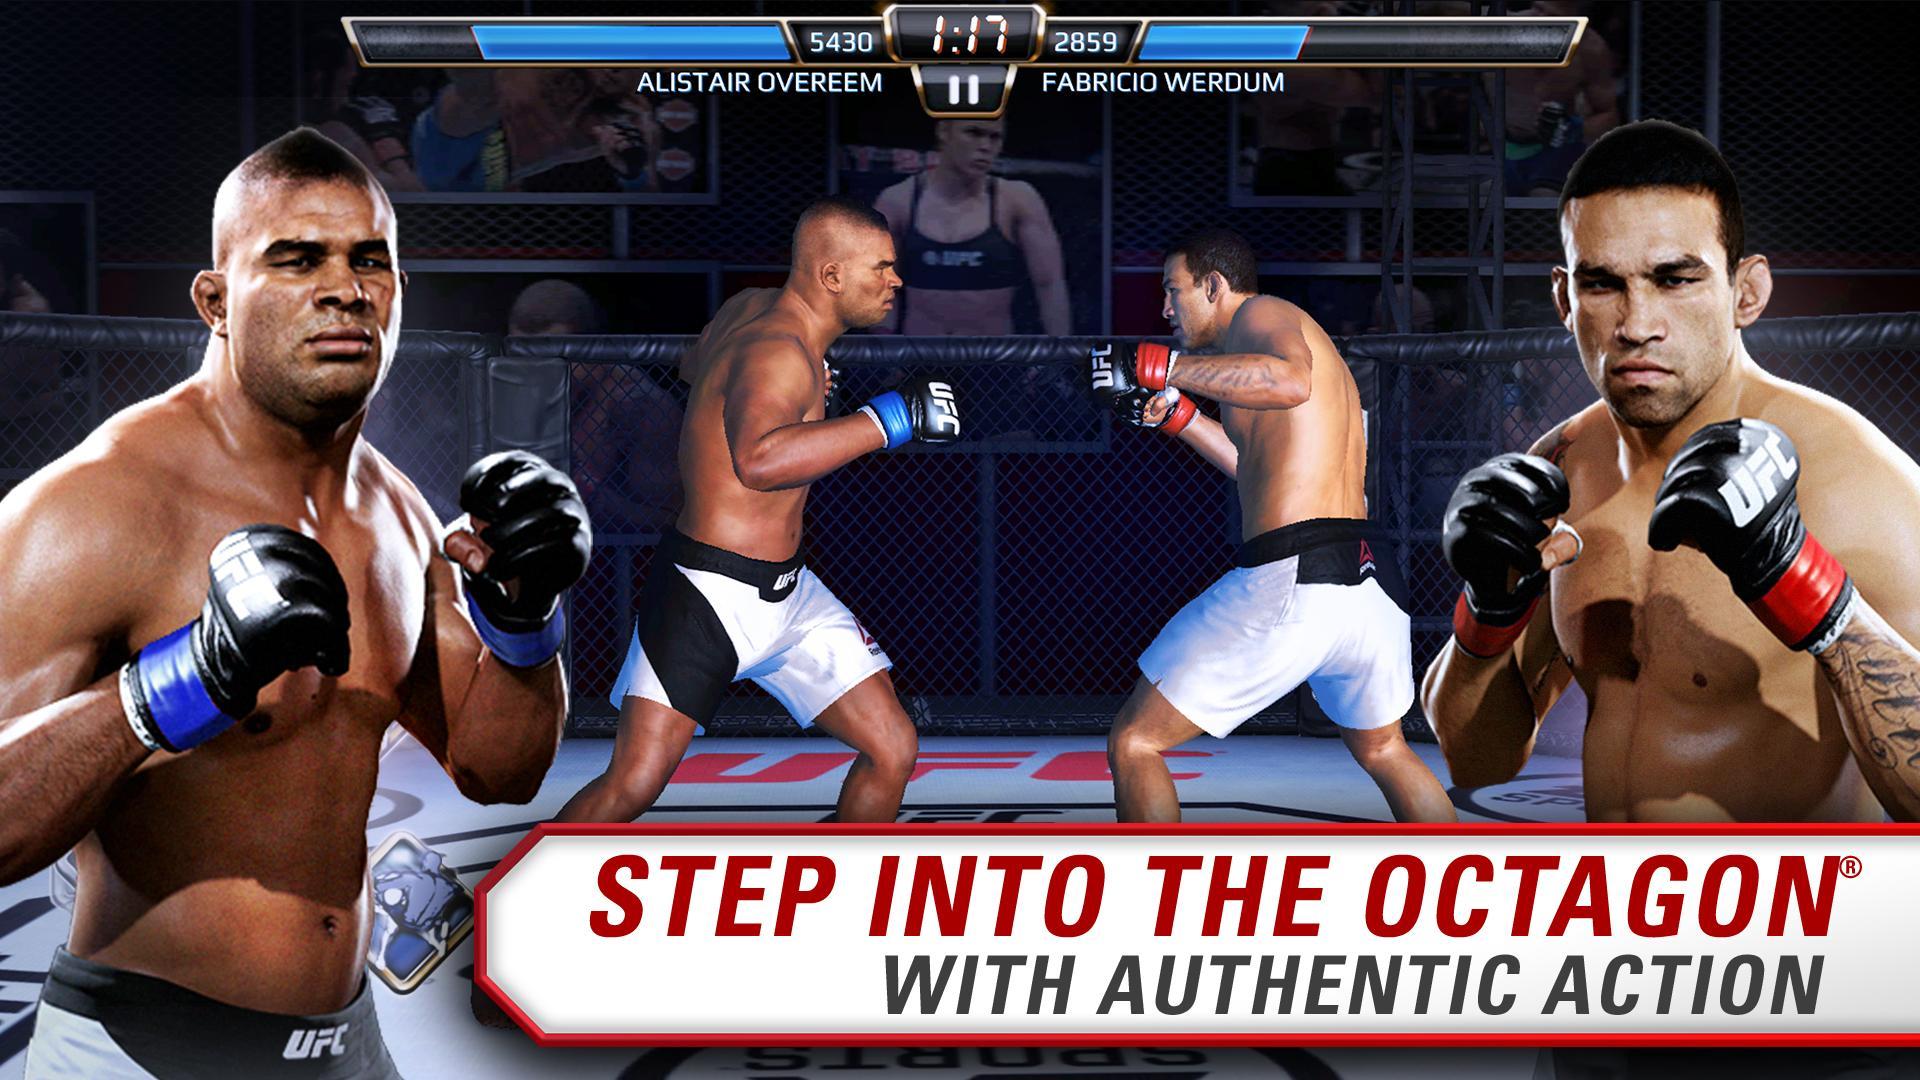 Ufc mobile игры. UFC 1 игра. UFC игра на андроид. Юфс мобайл 1. EA Sports UFC mobile.